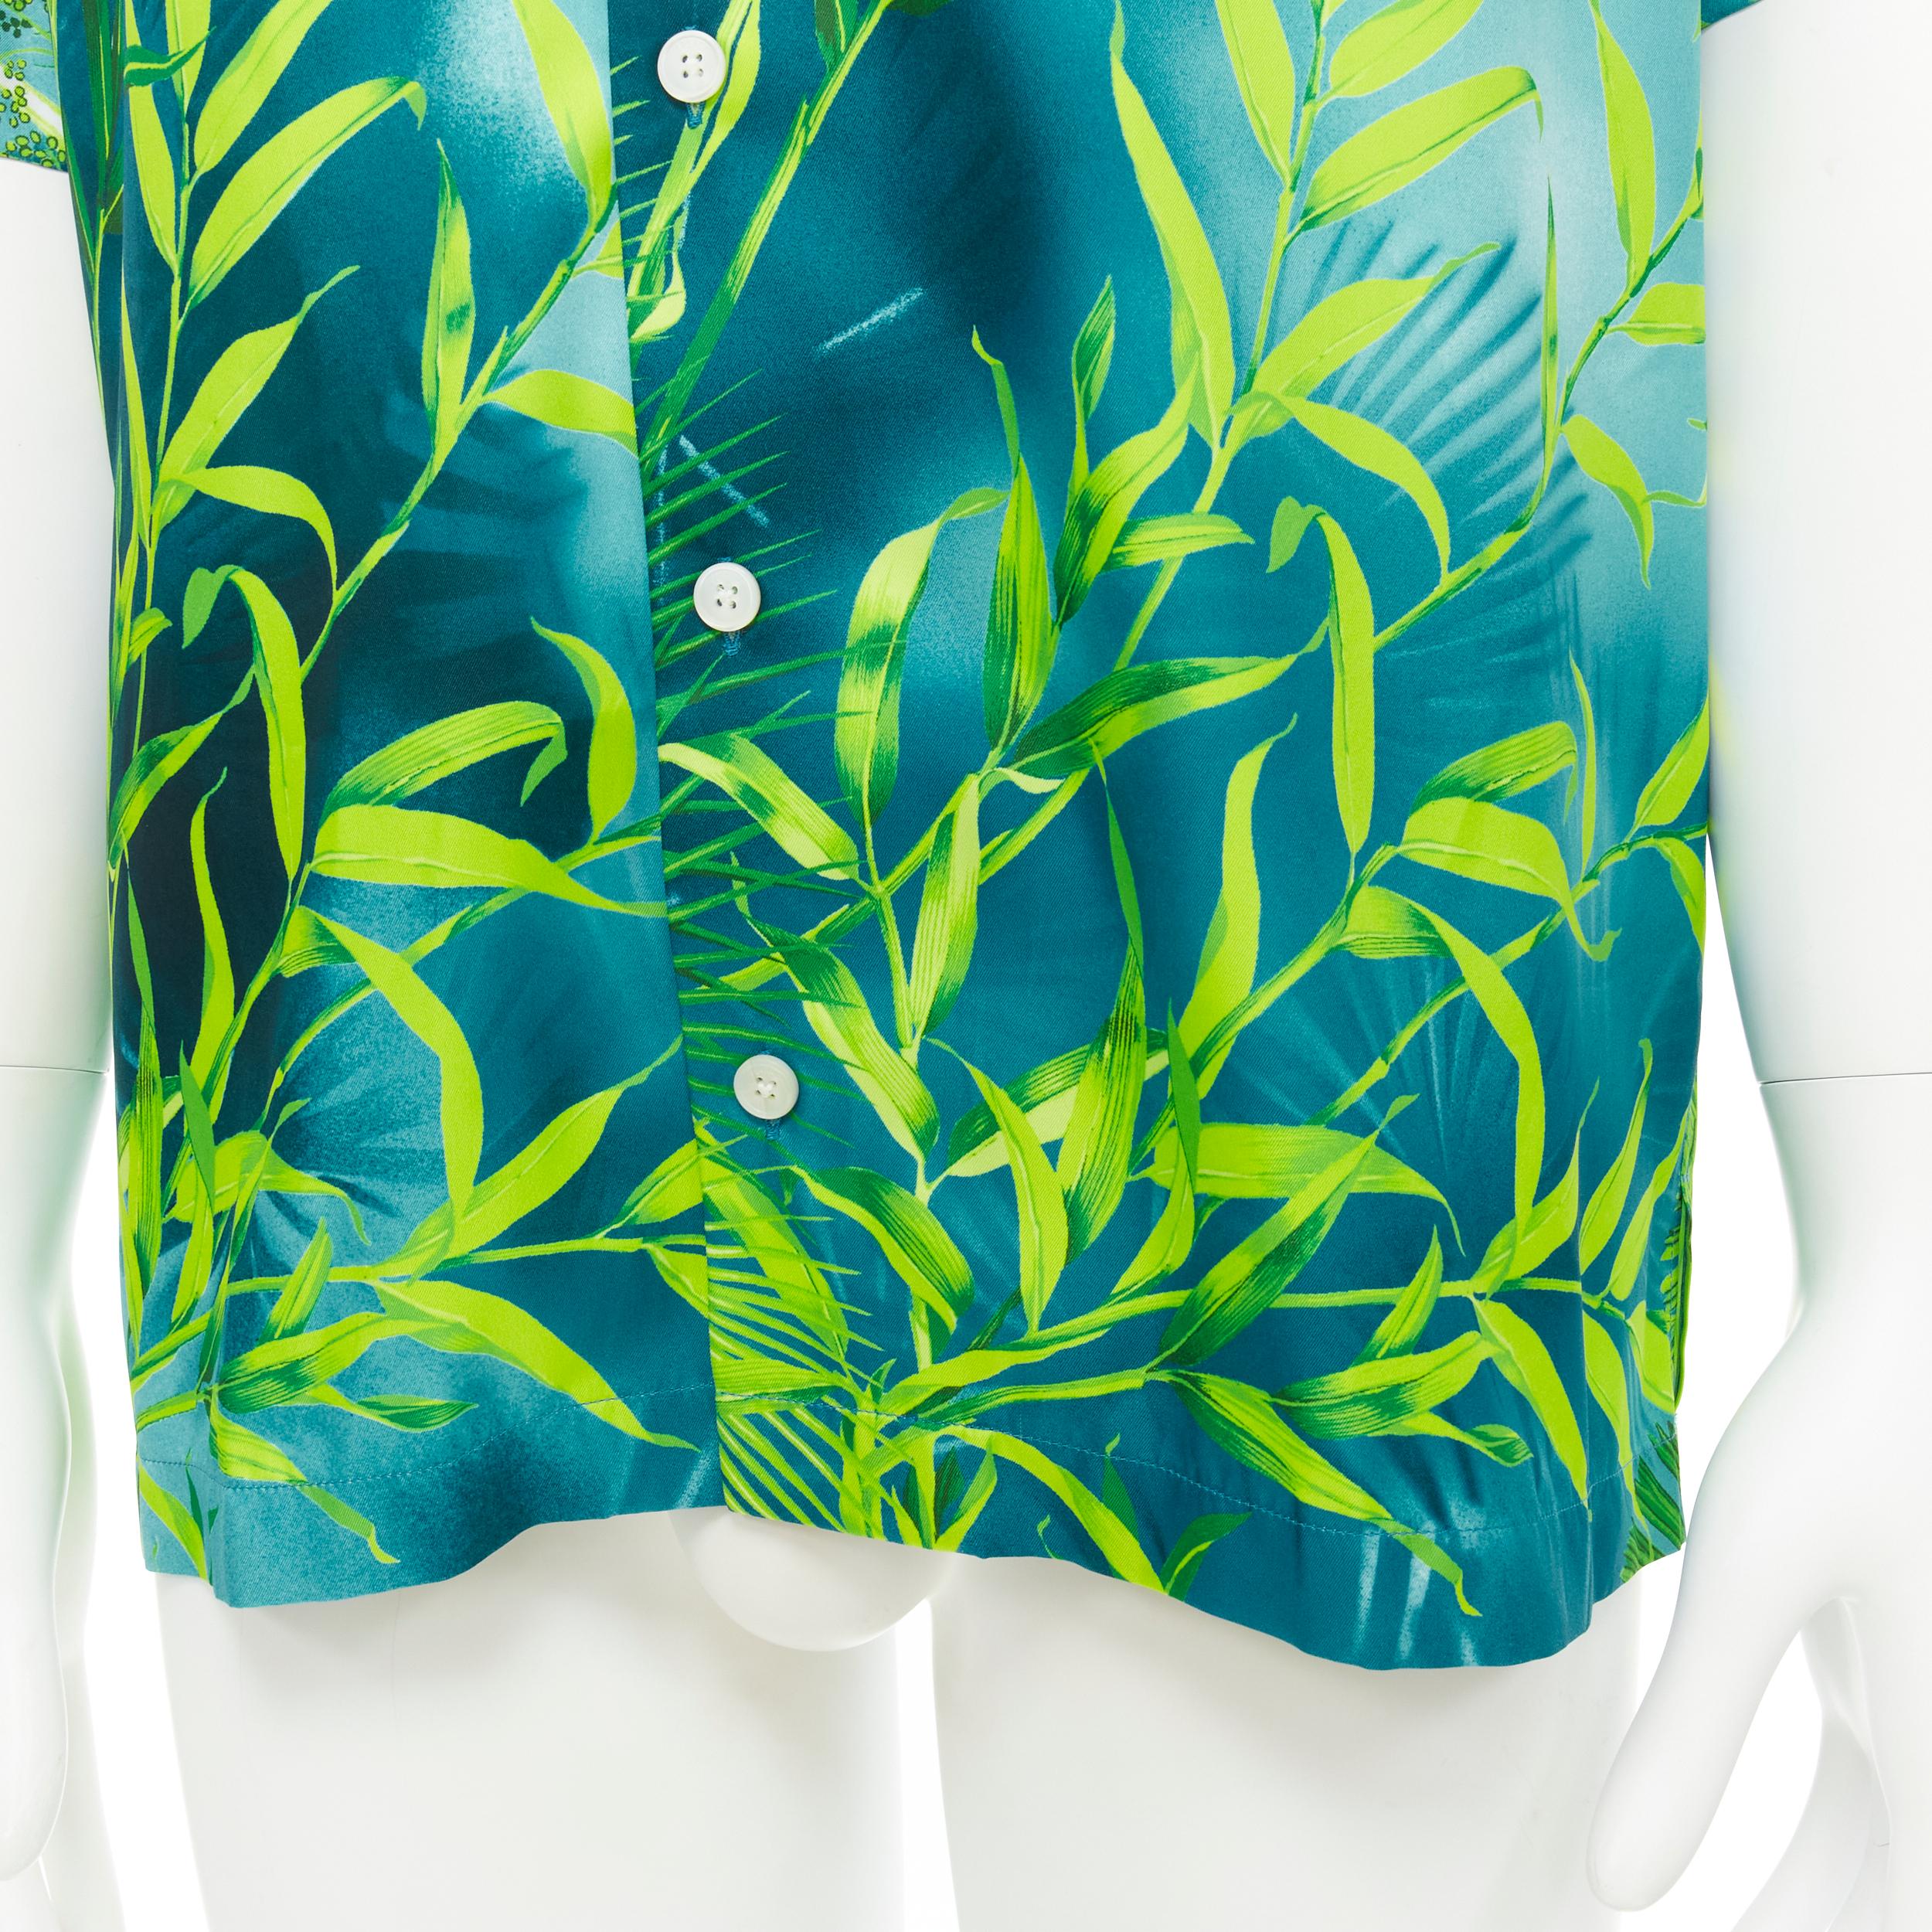 Men's new VERSACE 2020 Iconic JLo Jungle print green tropical print shirt EU38 S